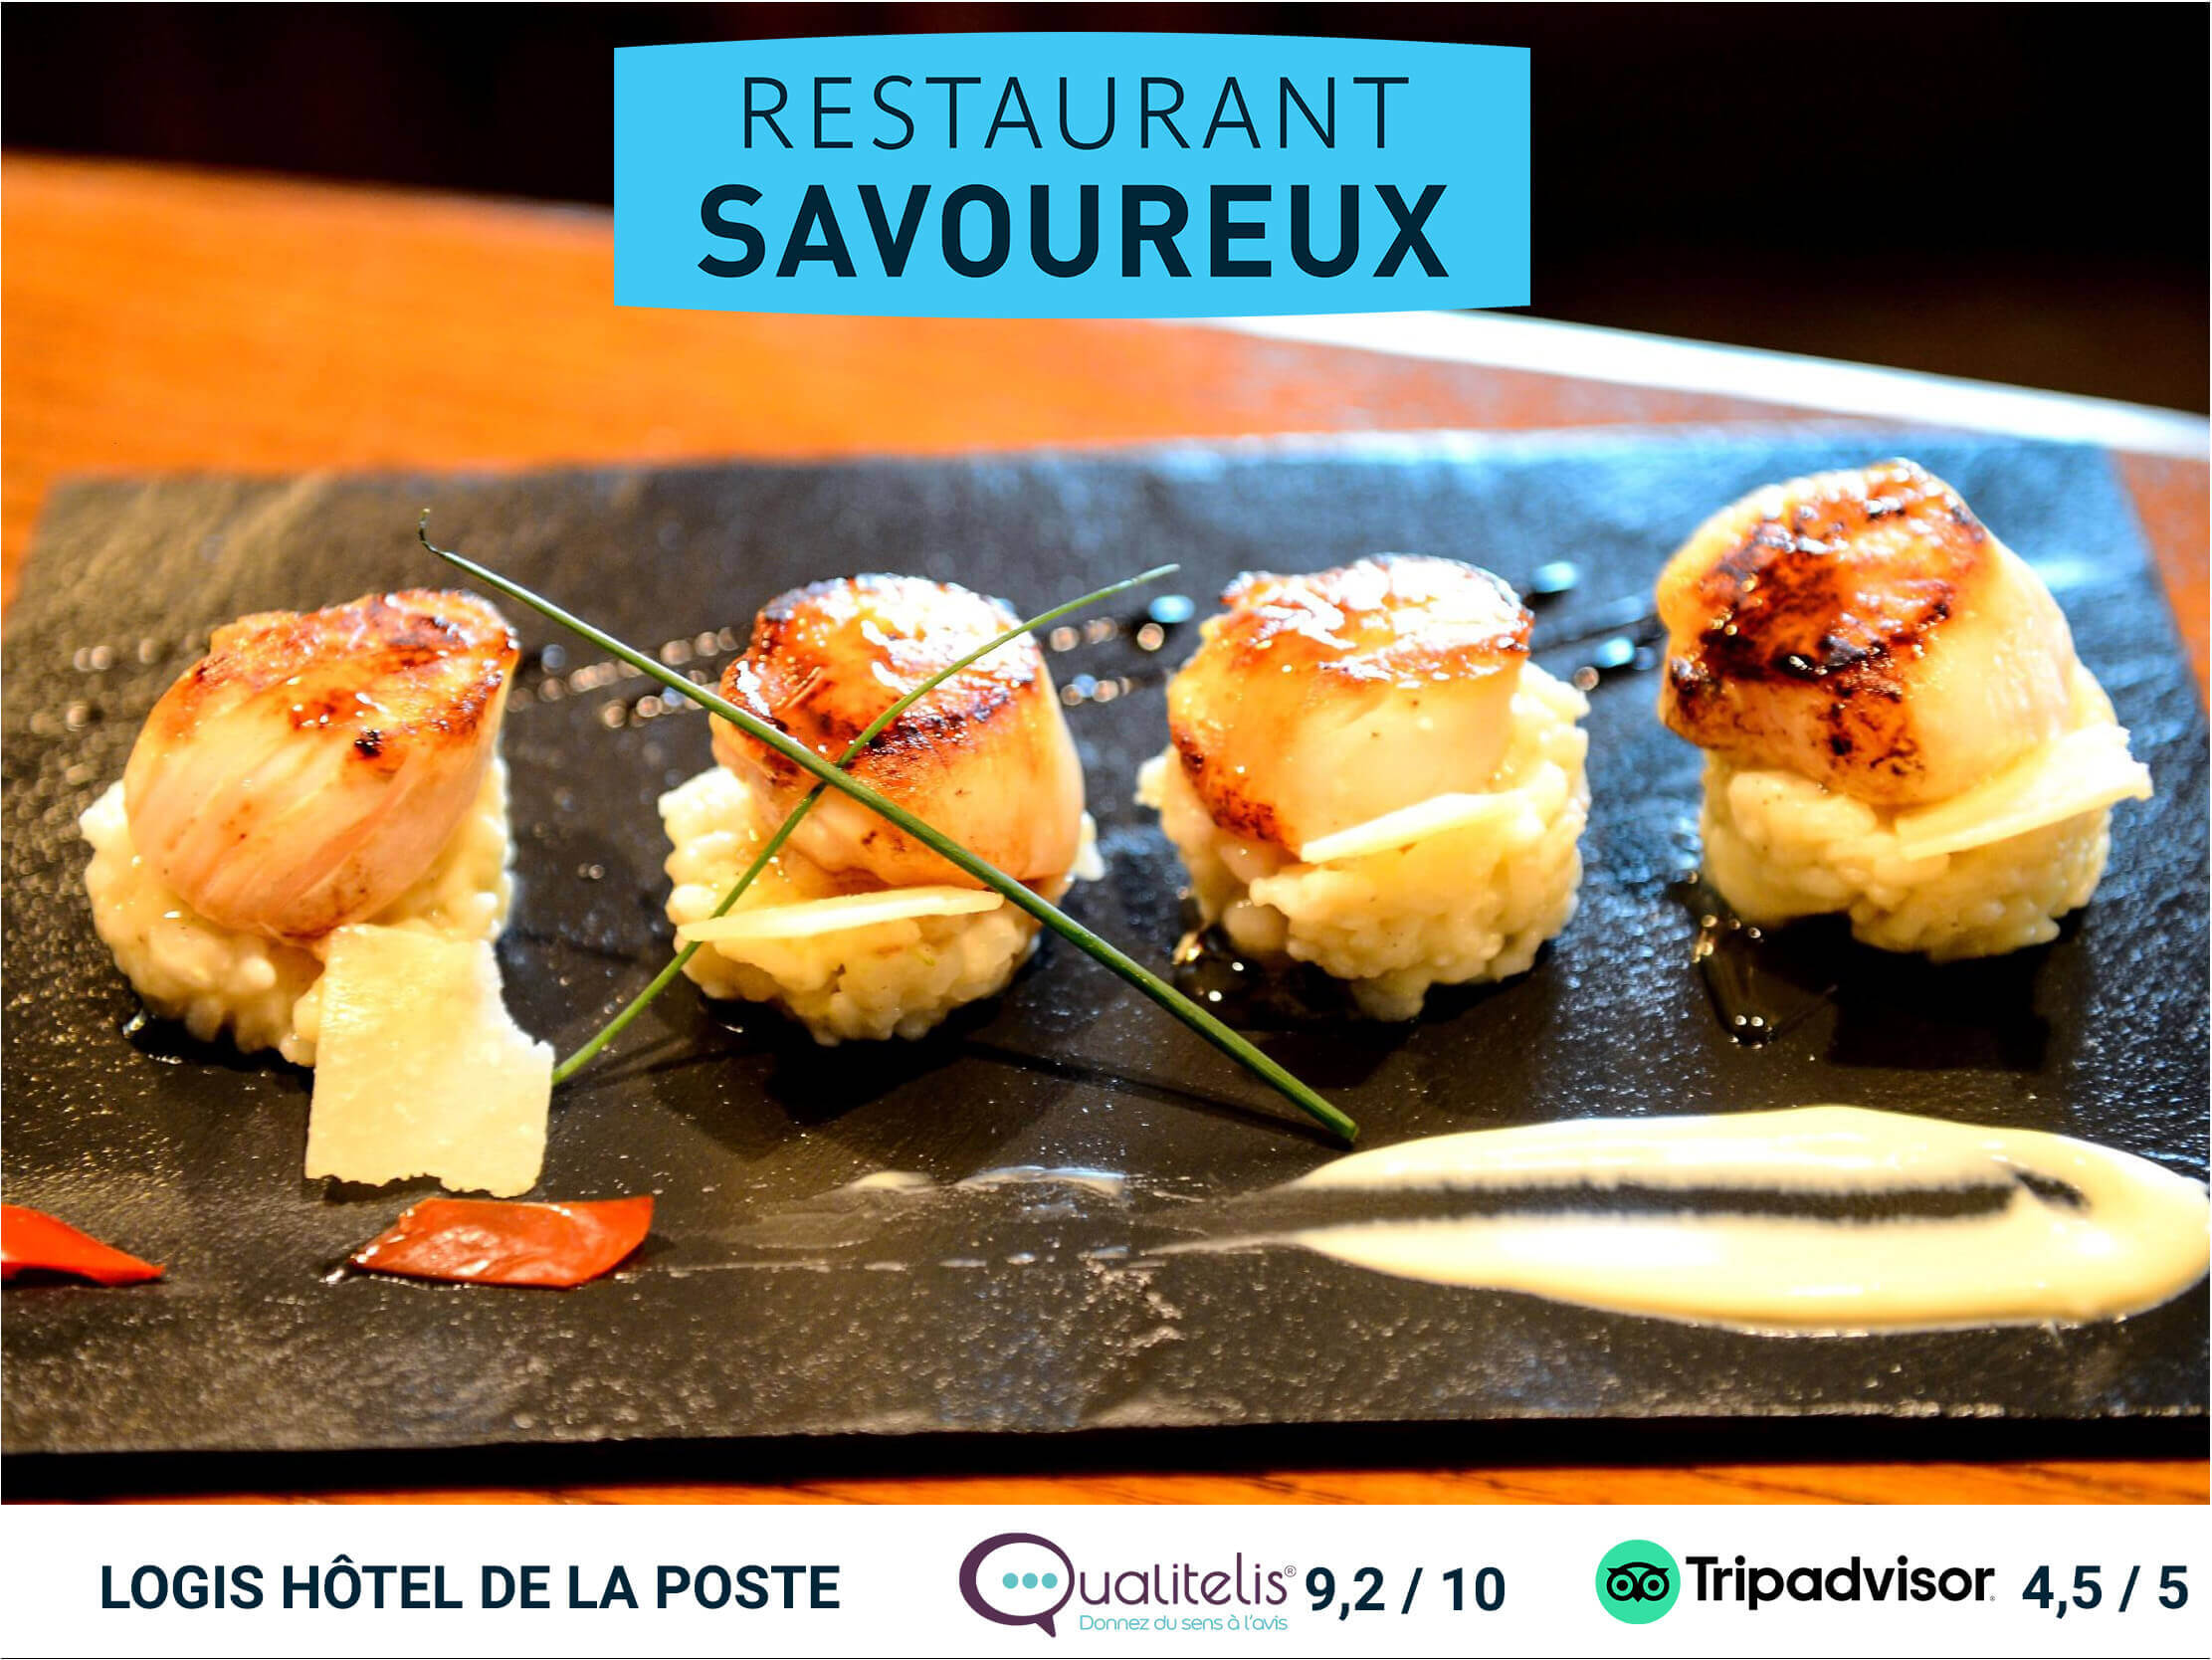 Restaurant Savoureux : THE PLEASURE OF FINE CUISINE.